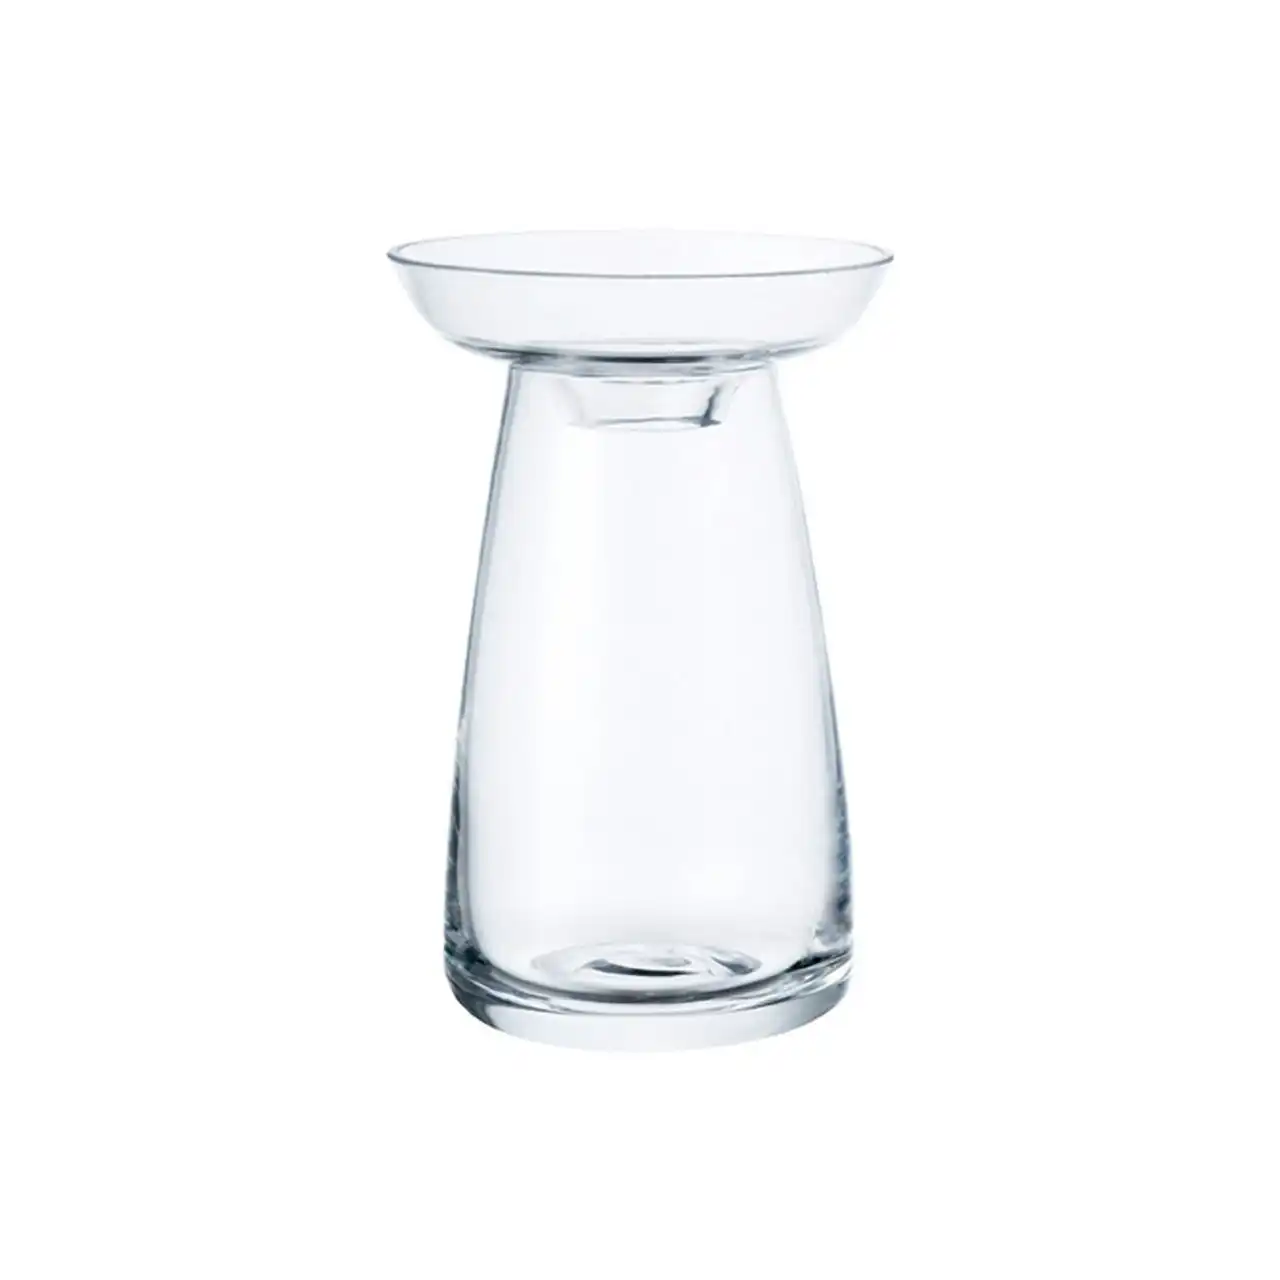 Kinto Aqua Culture 13cm Glass Flower Vase Container Small Home/Room Decor Clear